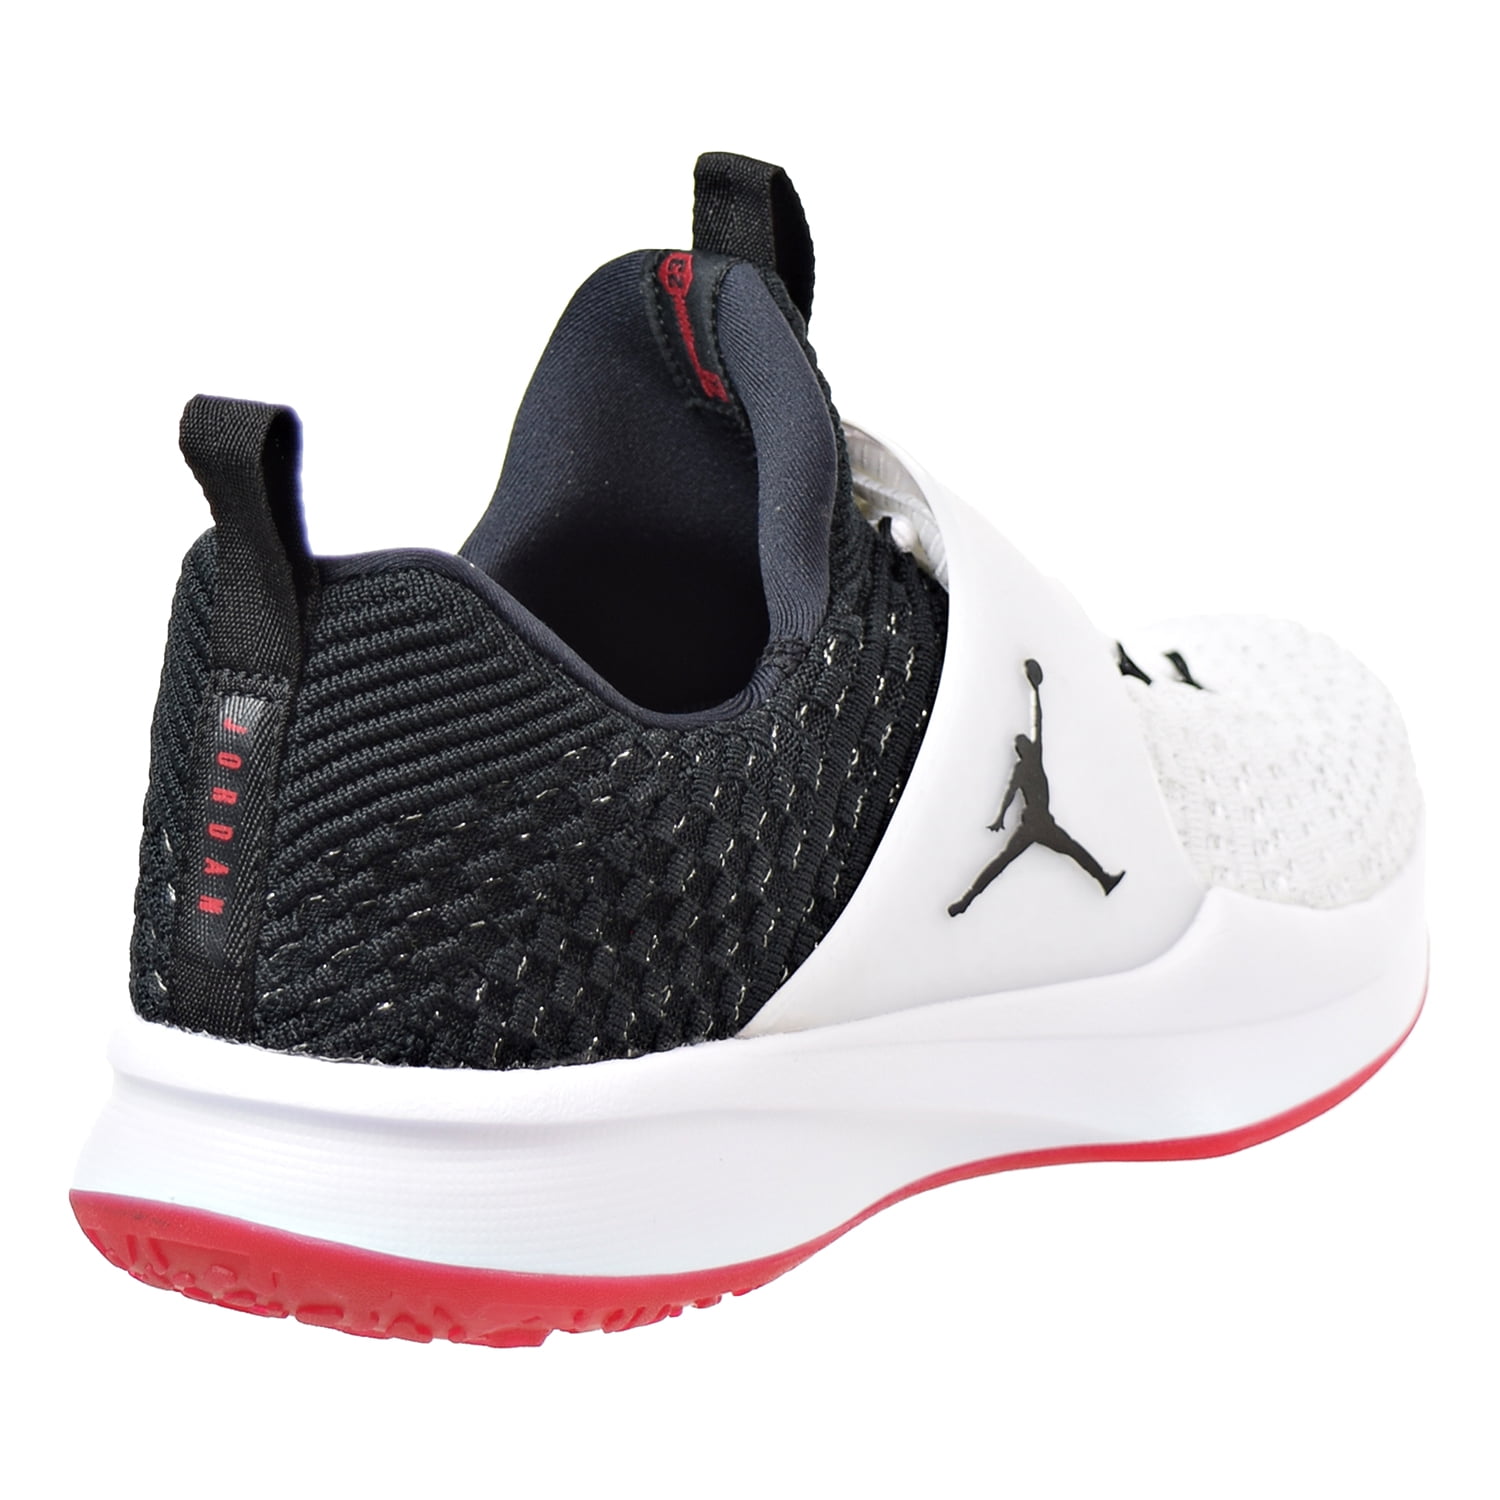 Mamá sacerdote adjetivo Jordan Trainer 2 Flyknit Men's Training Shoes White/Black-Black-Gym Red  921210-101 - Walmart.com